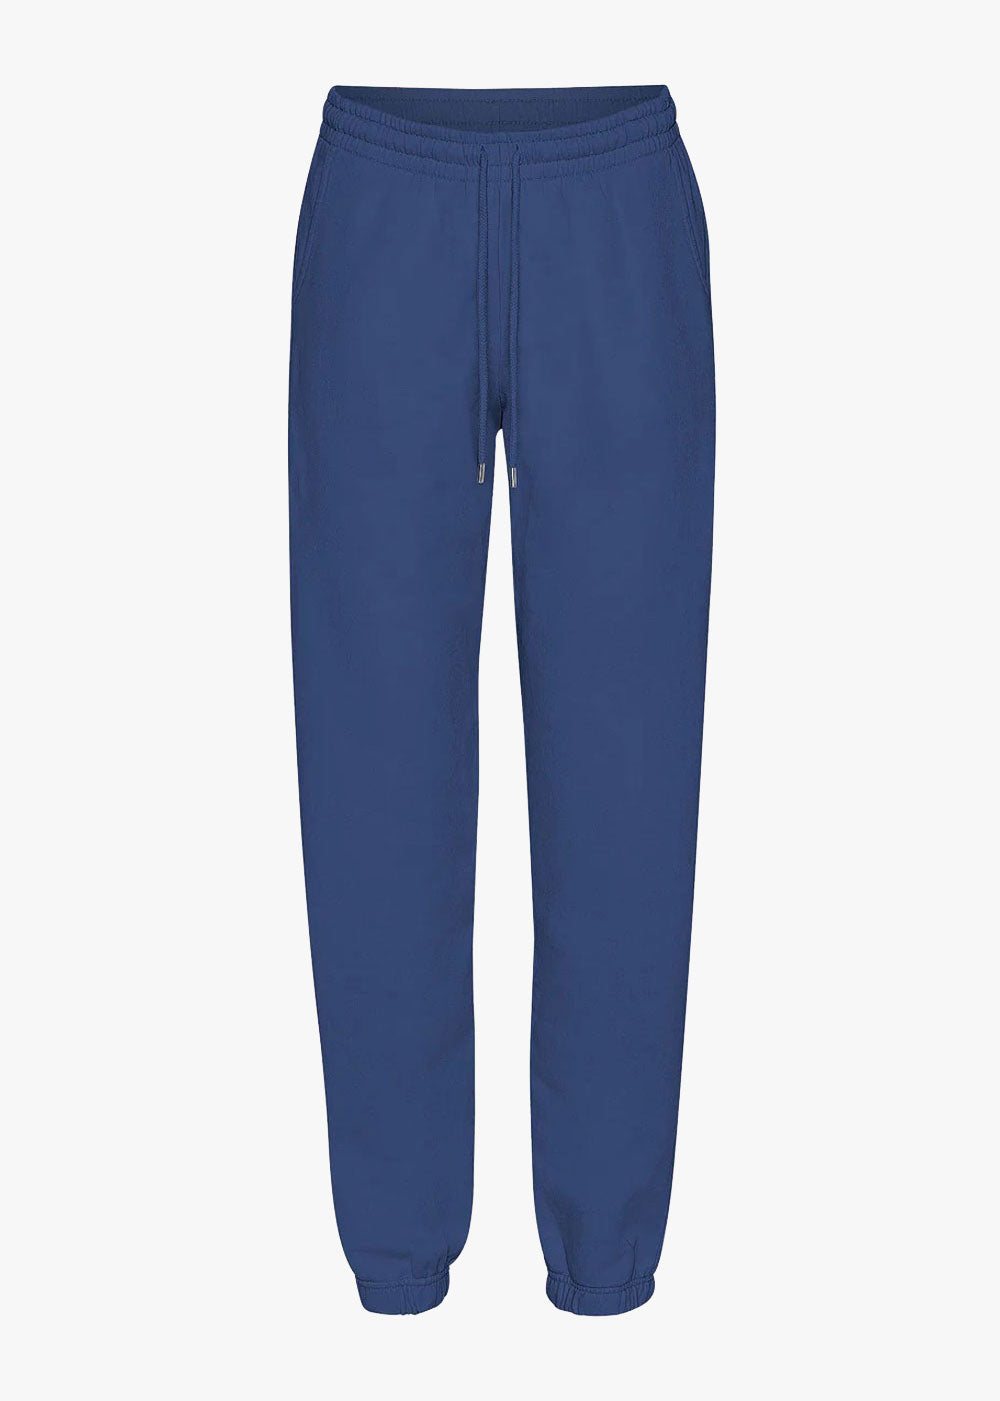 Organic Sweatpants - Marine Blue - Colorful Standard - Danali